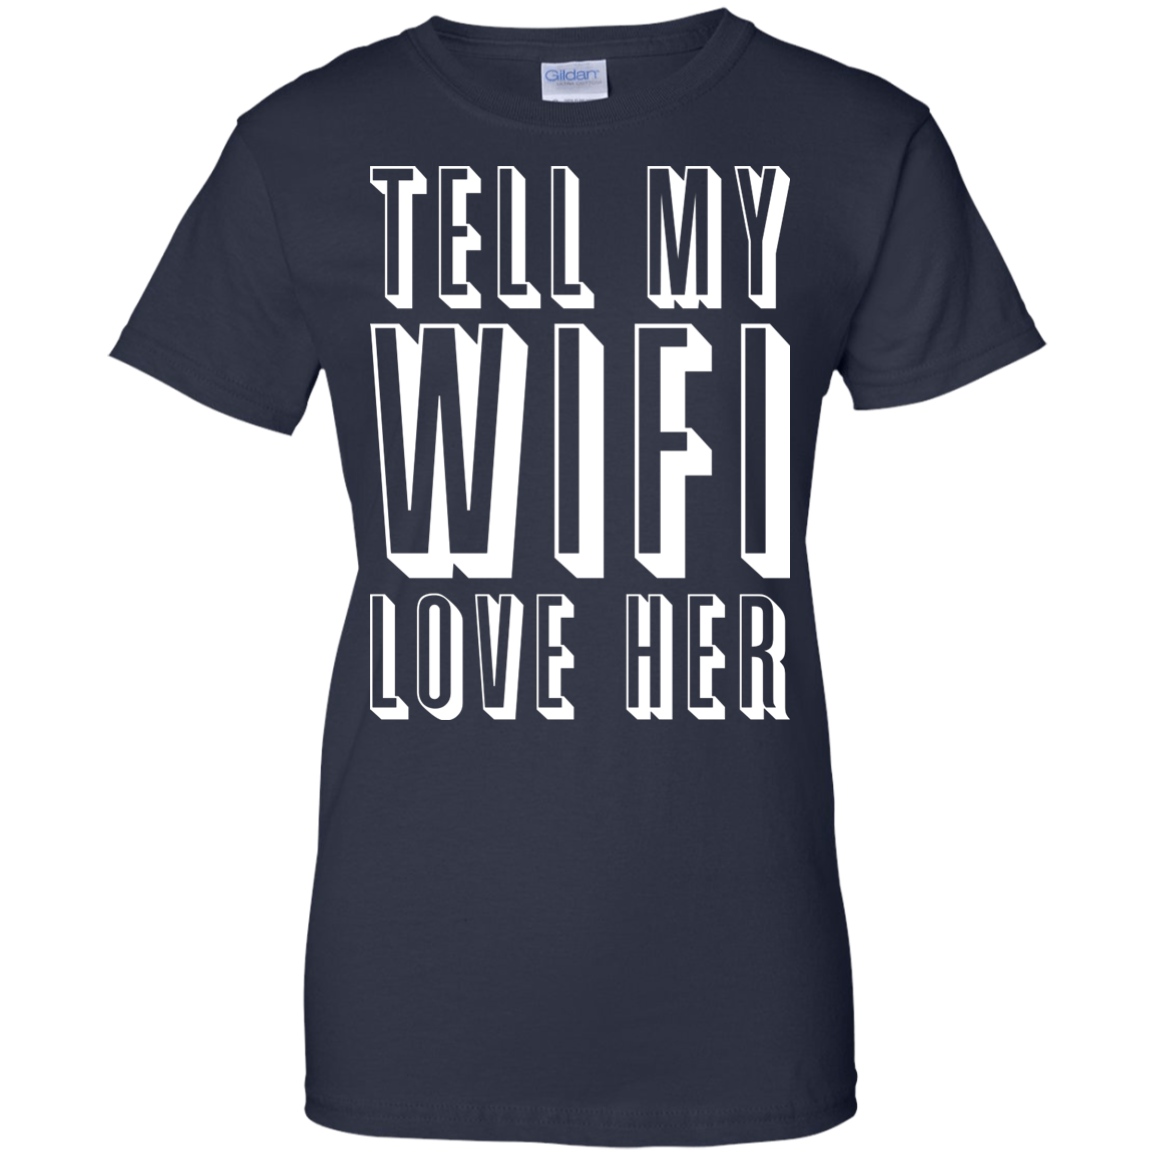 Tell My WiFi Love Her